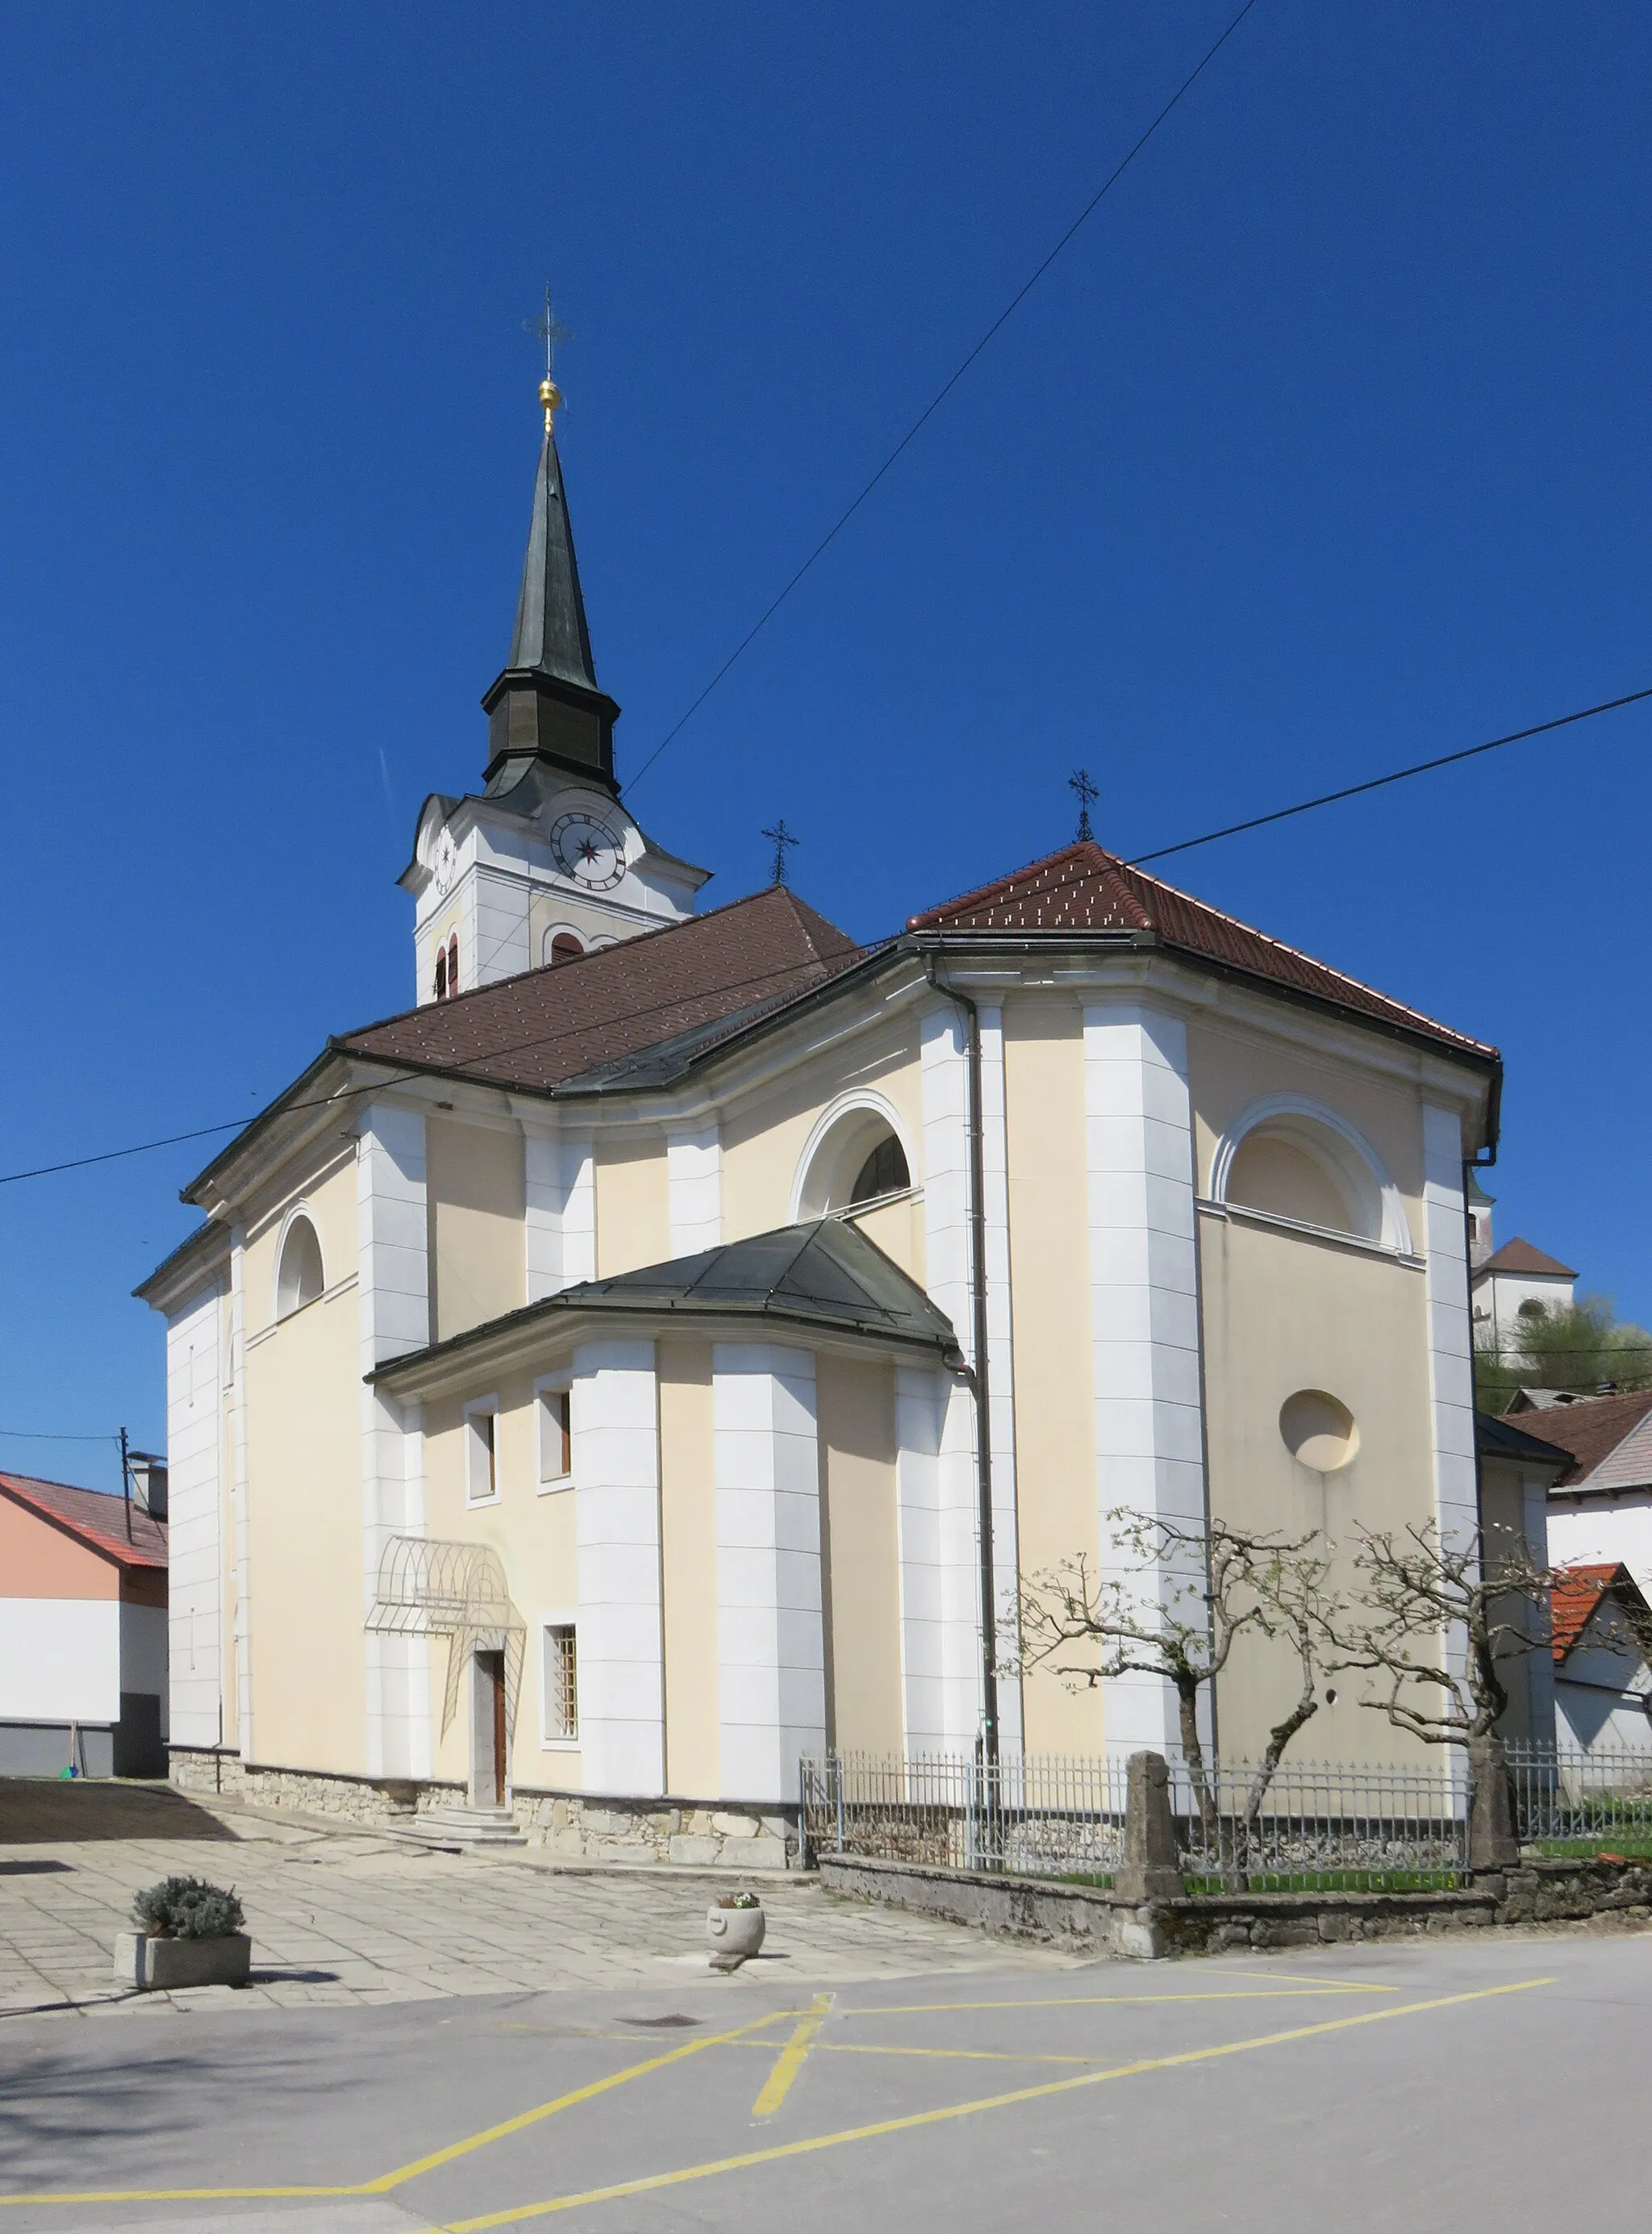 Image de Zahodna Slovenija